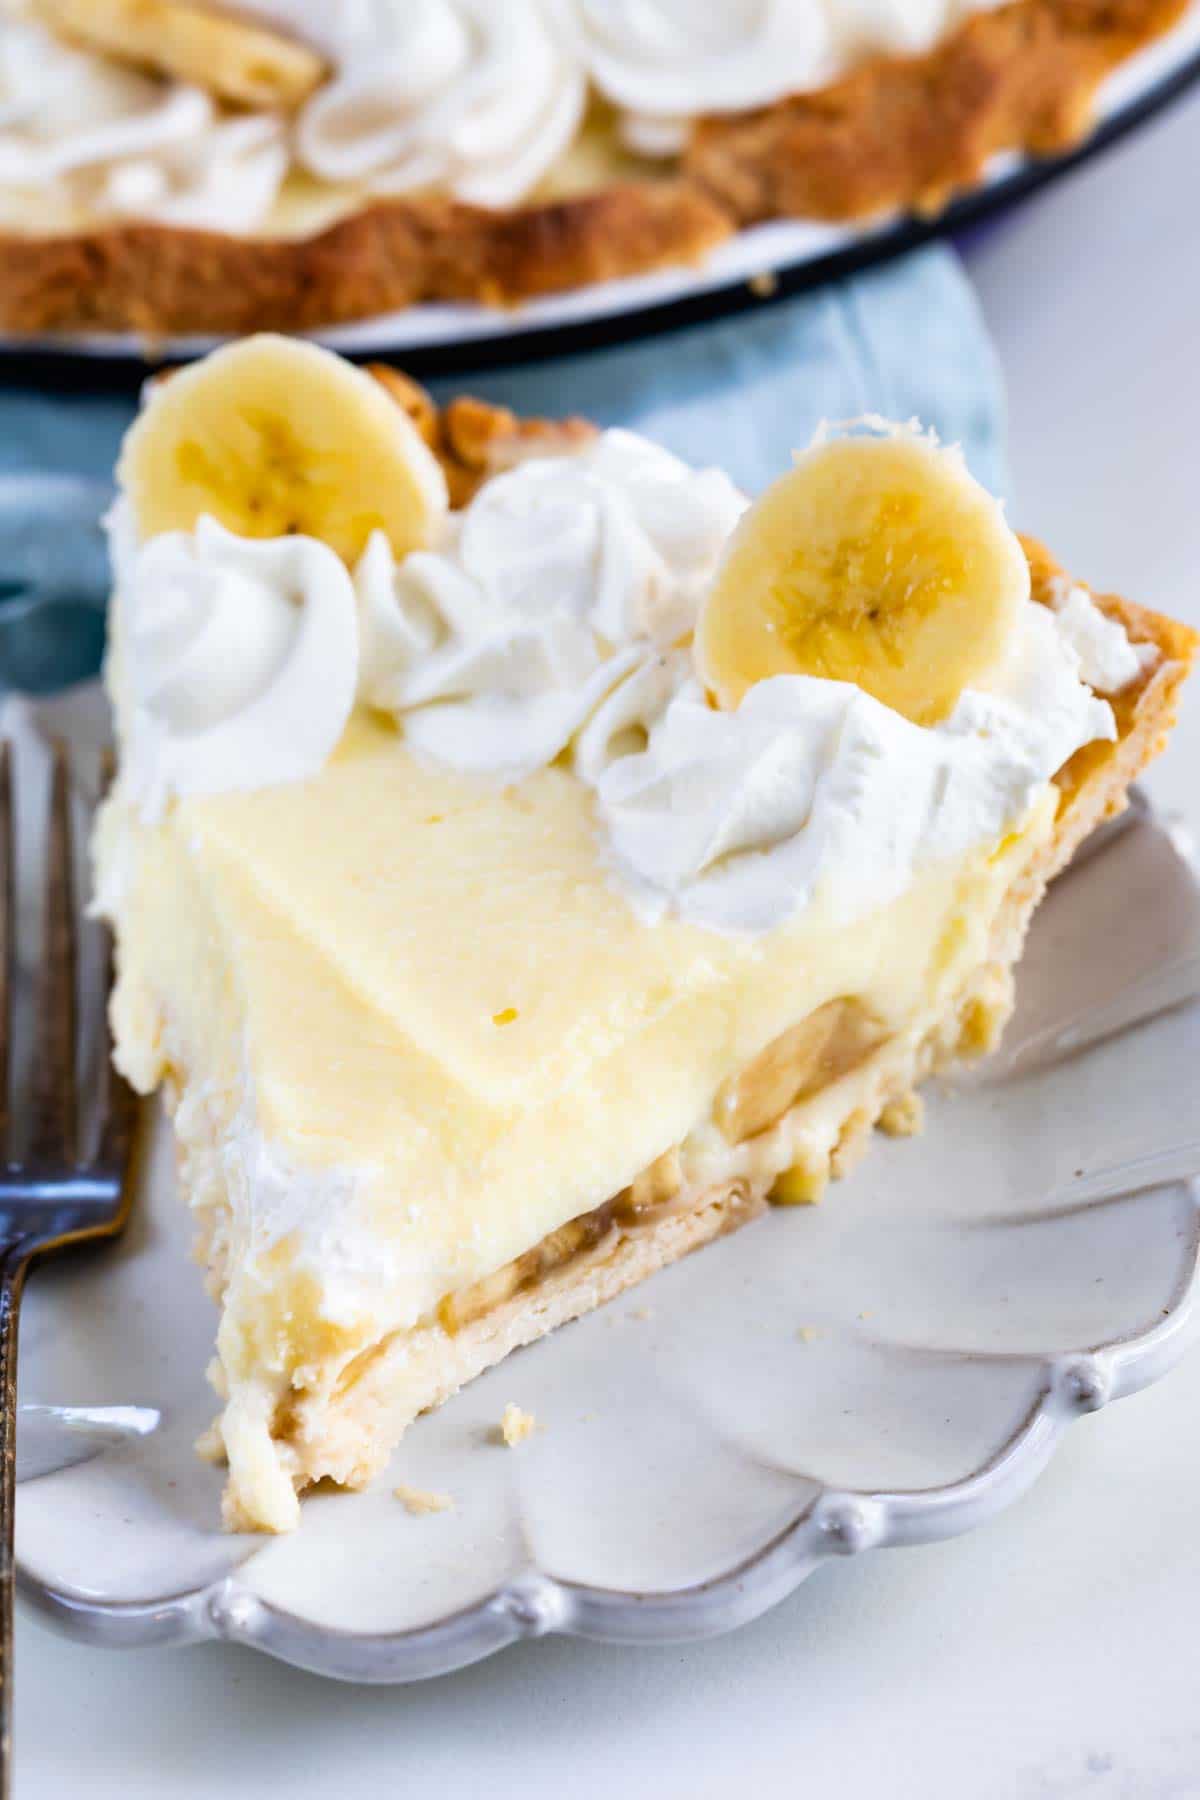 Is banana cream pie made of pudding?